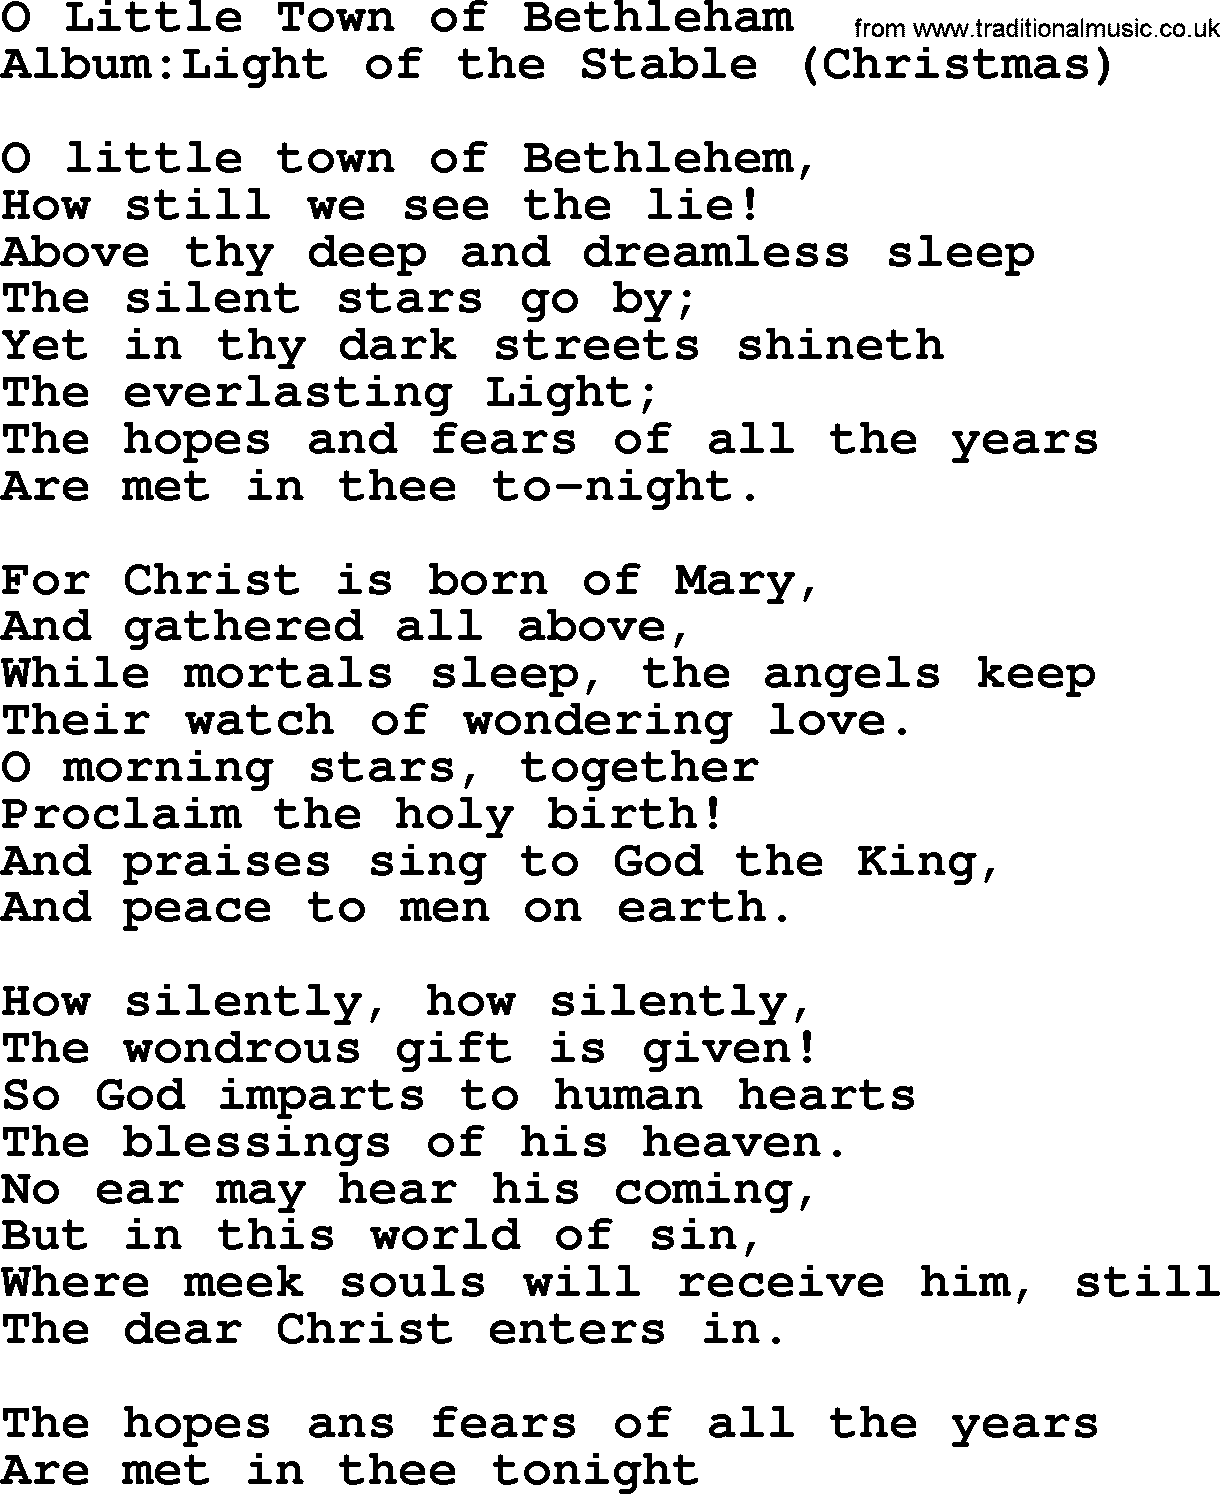 Emmylou Harris song: O Little Town of Bethleham lyrics